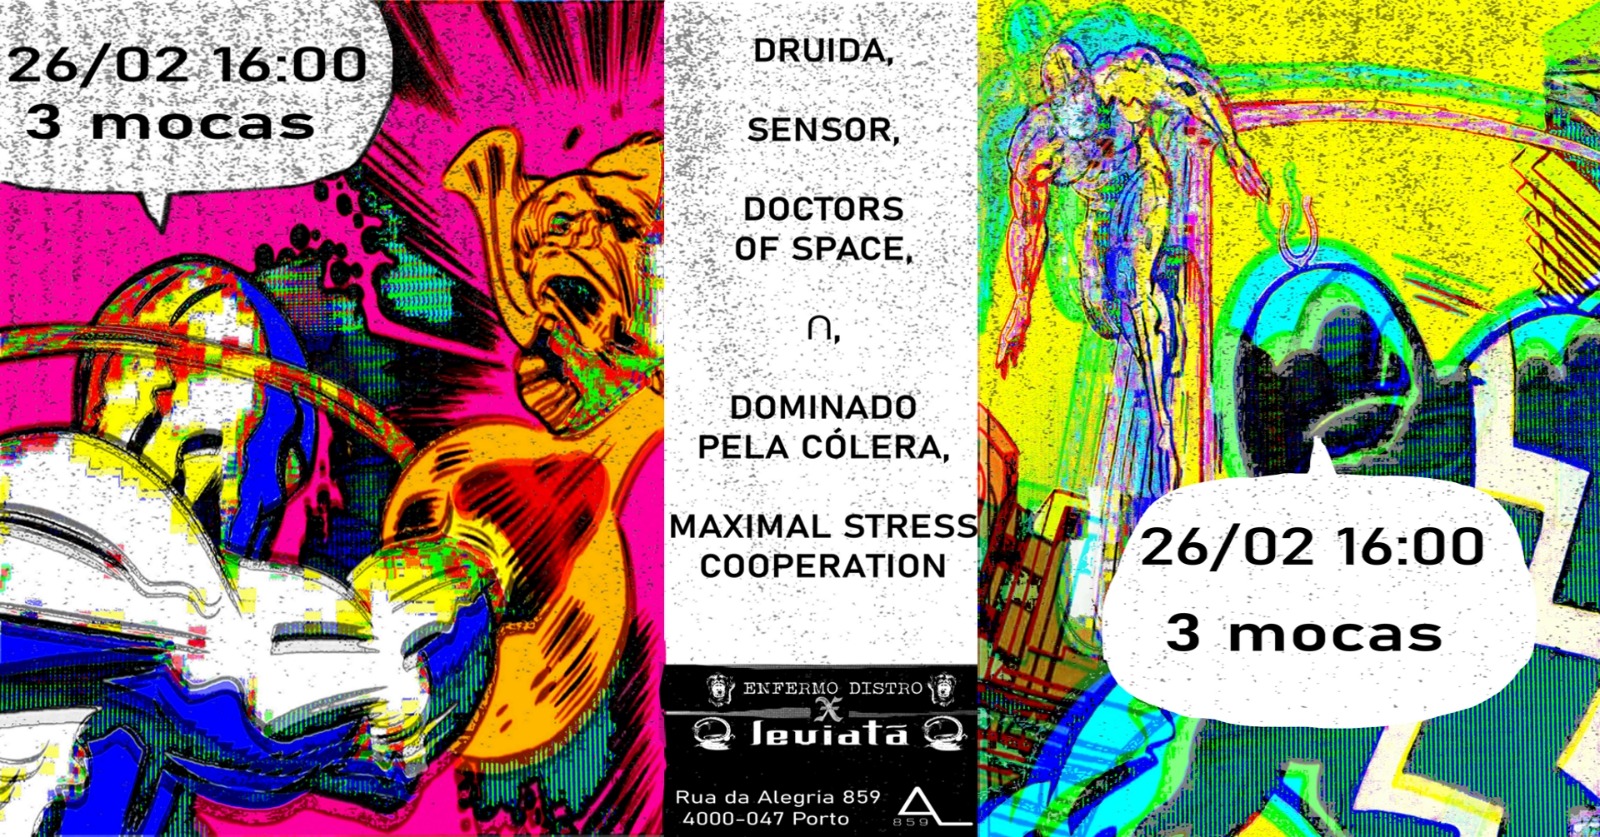 Sensor // Doctors of Space // Druida // ∩ // Maximal Stress Cooperation // Dominado Pela Cólera